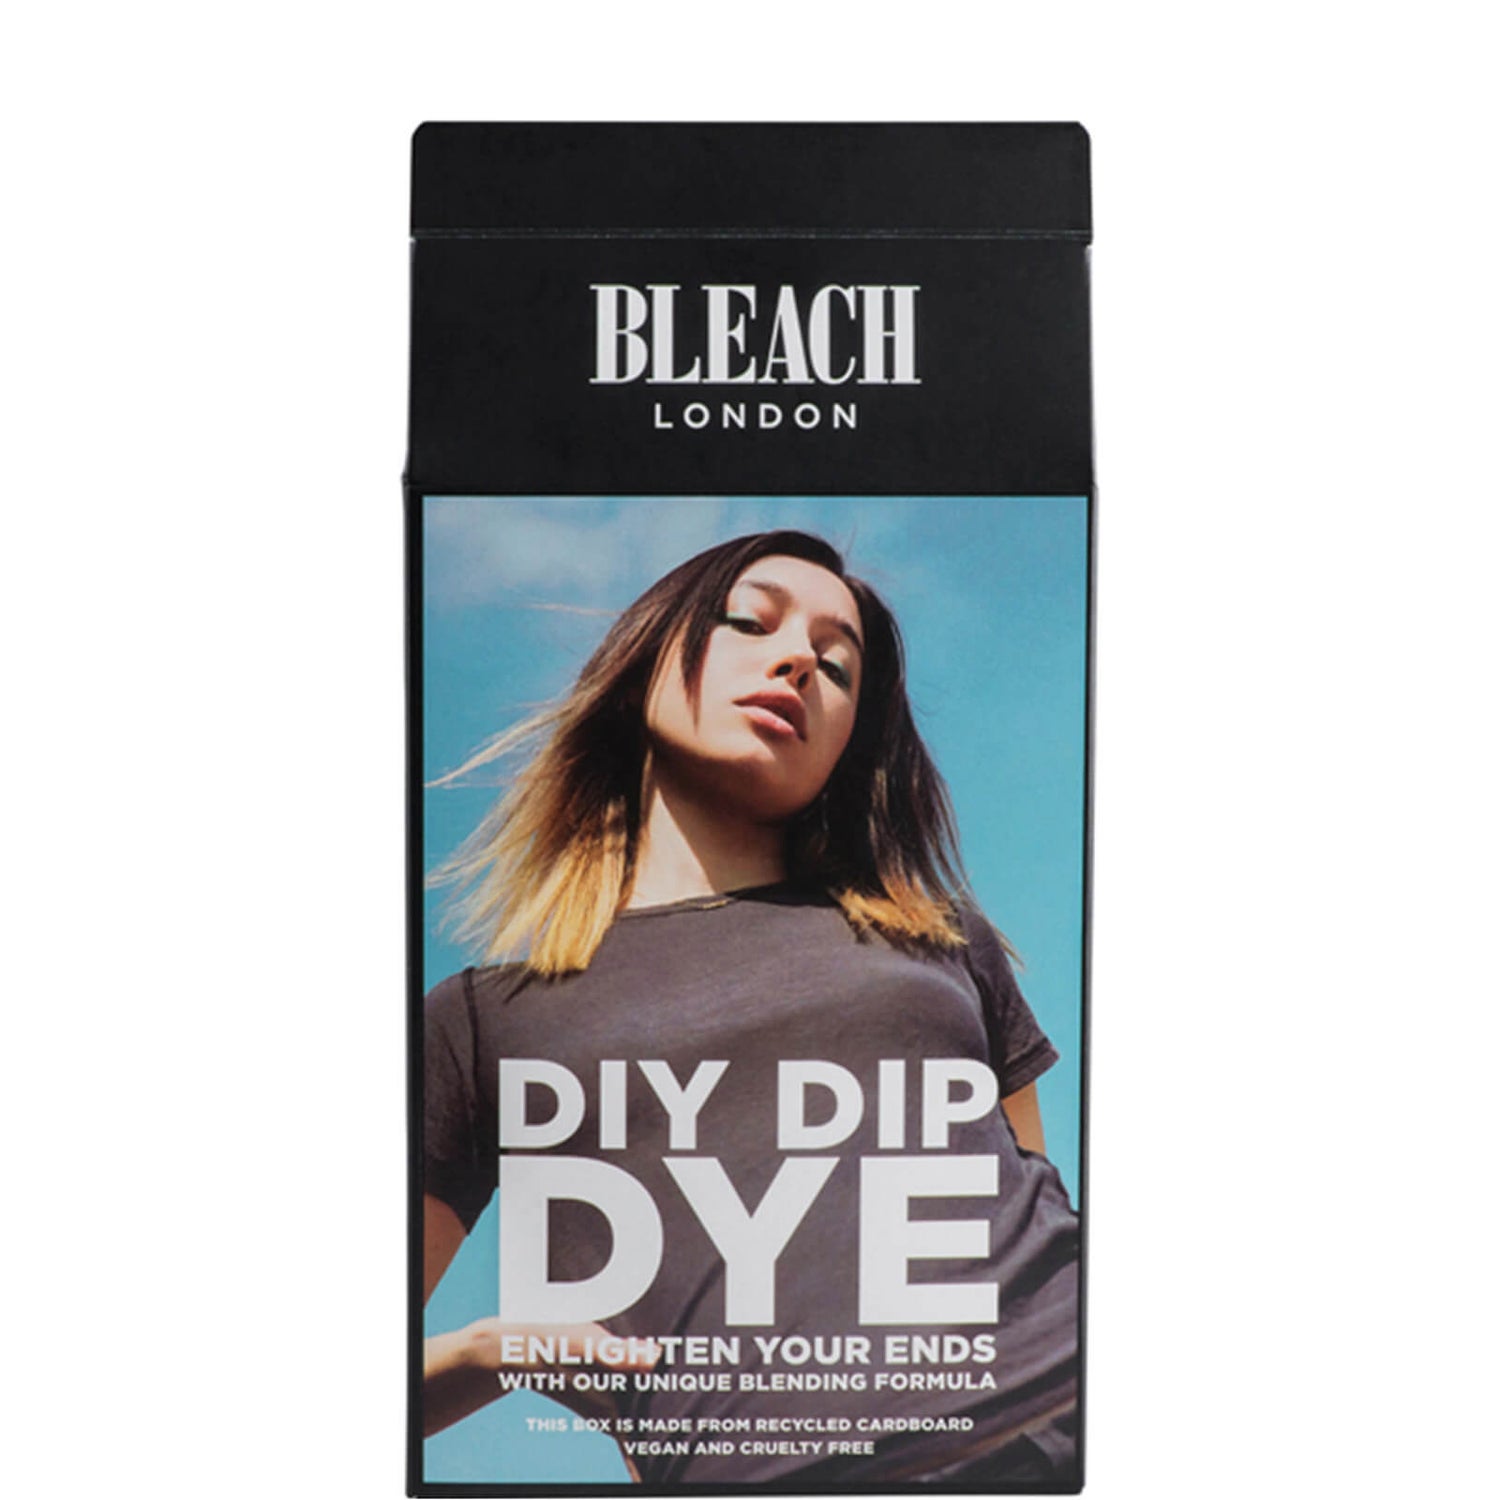 BLEACH LONDON Diy Dip Dye Kit(블리치 런던 DIY 딥 다이 키트)